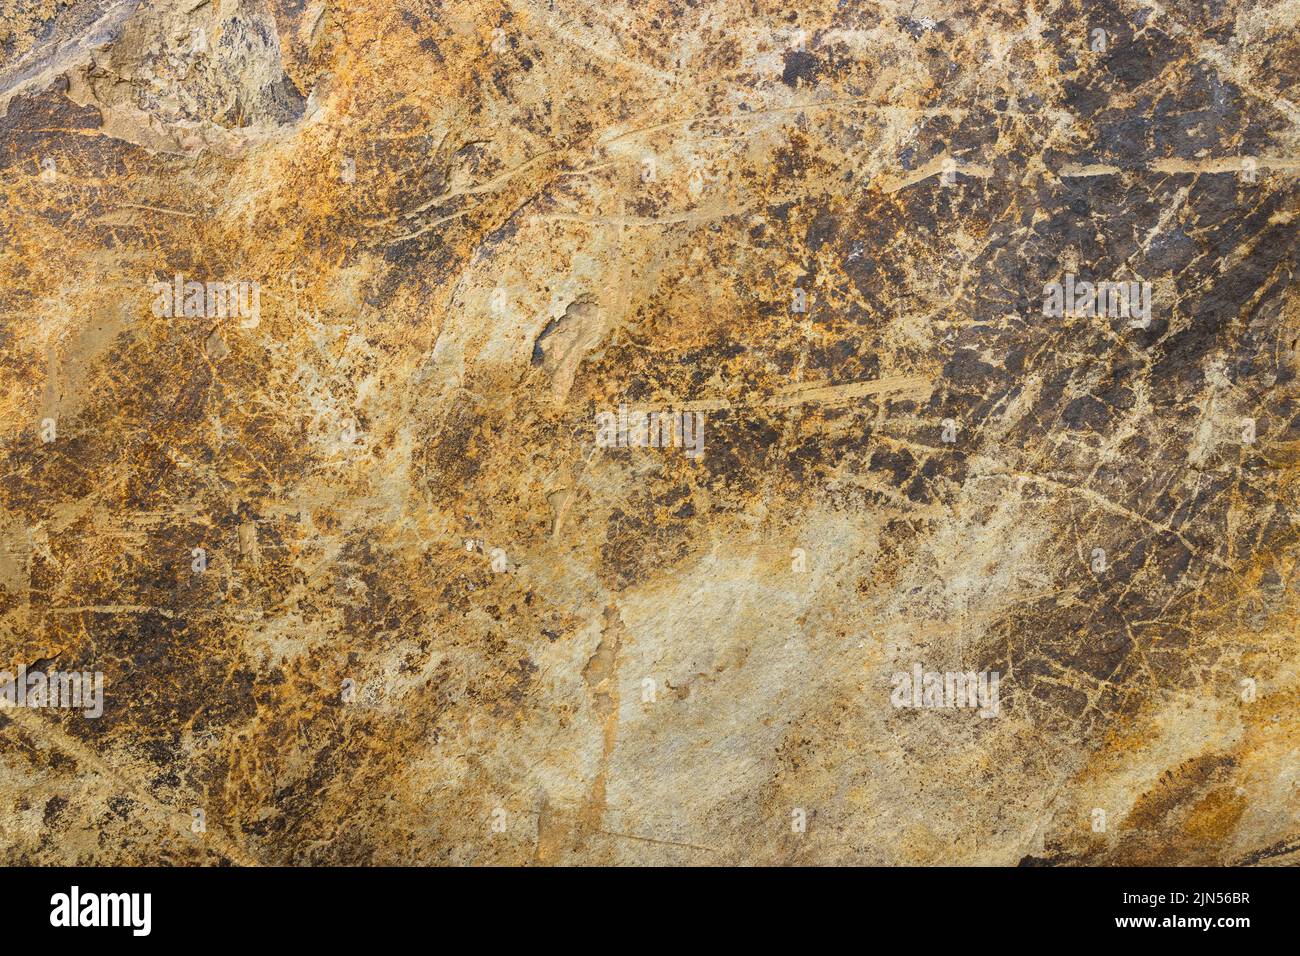 Natural stone background with golden veins. Granite slab stone, rustic matt texture Stock Photo